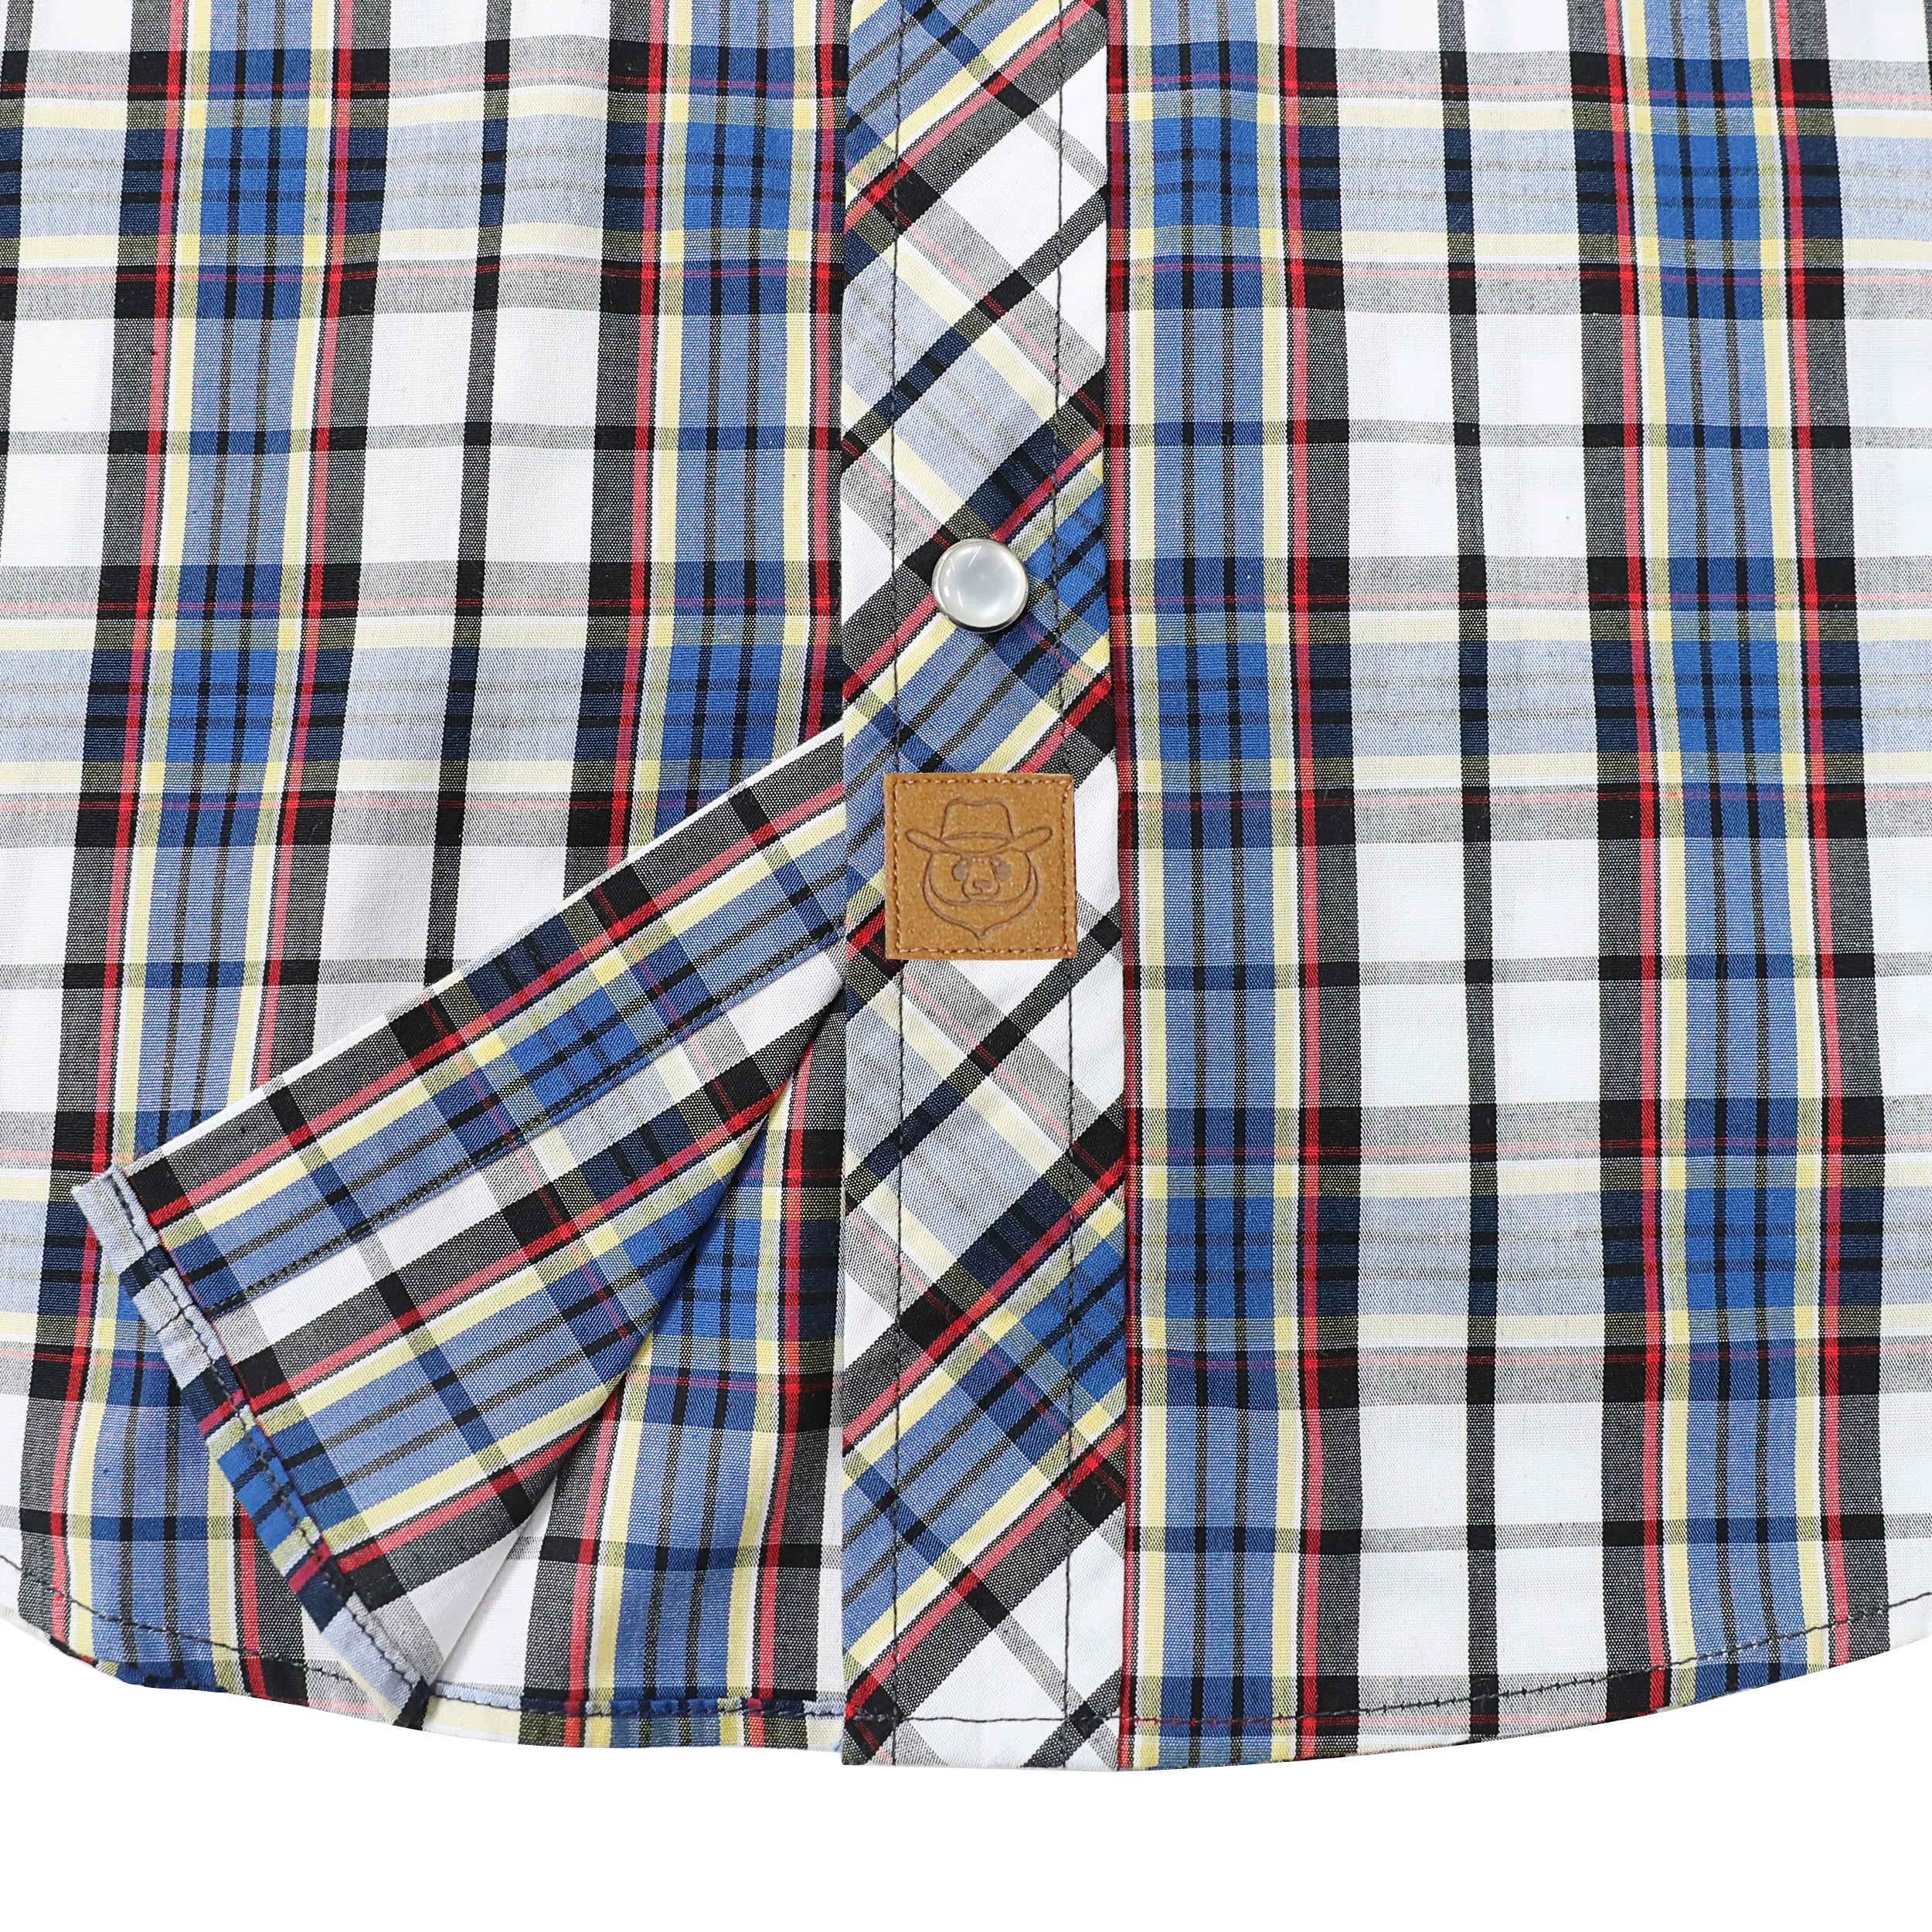 Dubinik® Western Shirts for Men Short Sleeve Plaid Pearl Snap Shirts for Men Button Up Shirt Cowboy Casual Work Shirt#41009